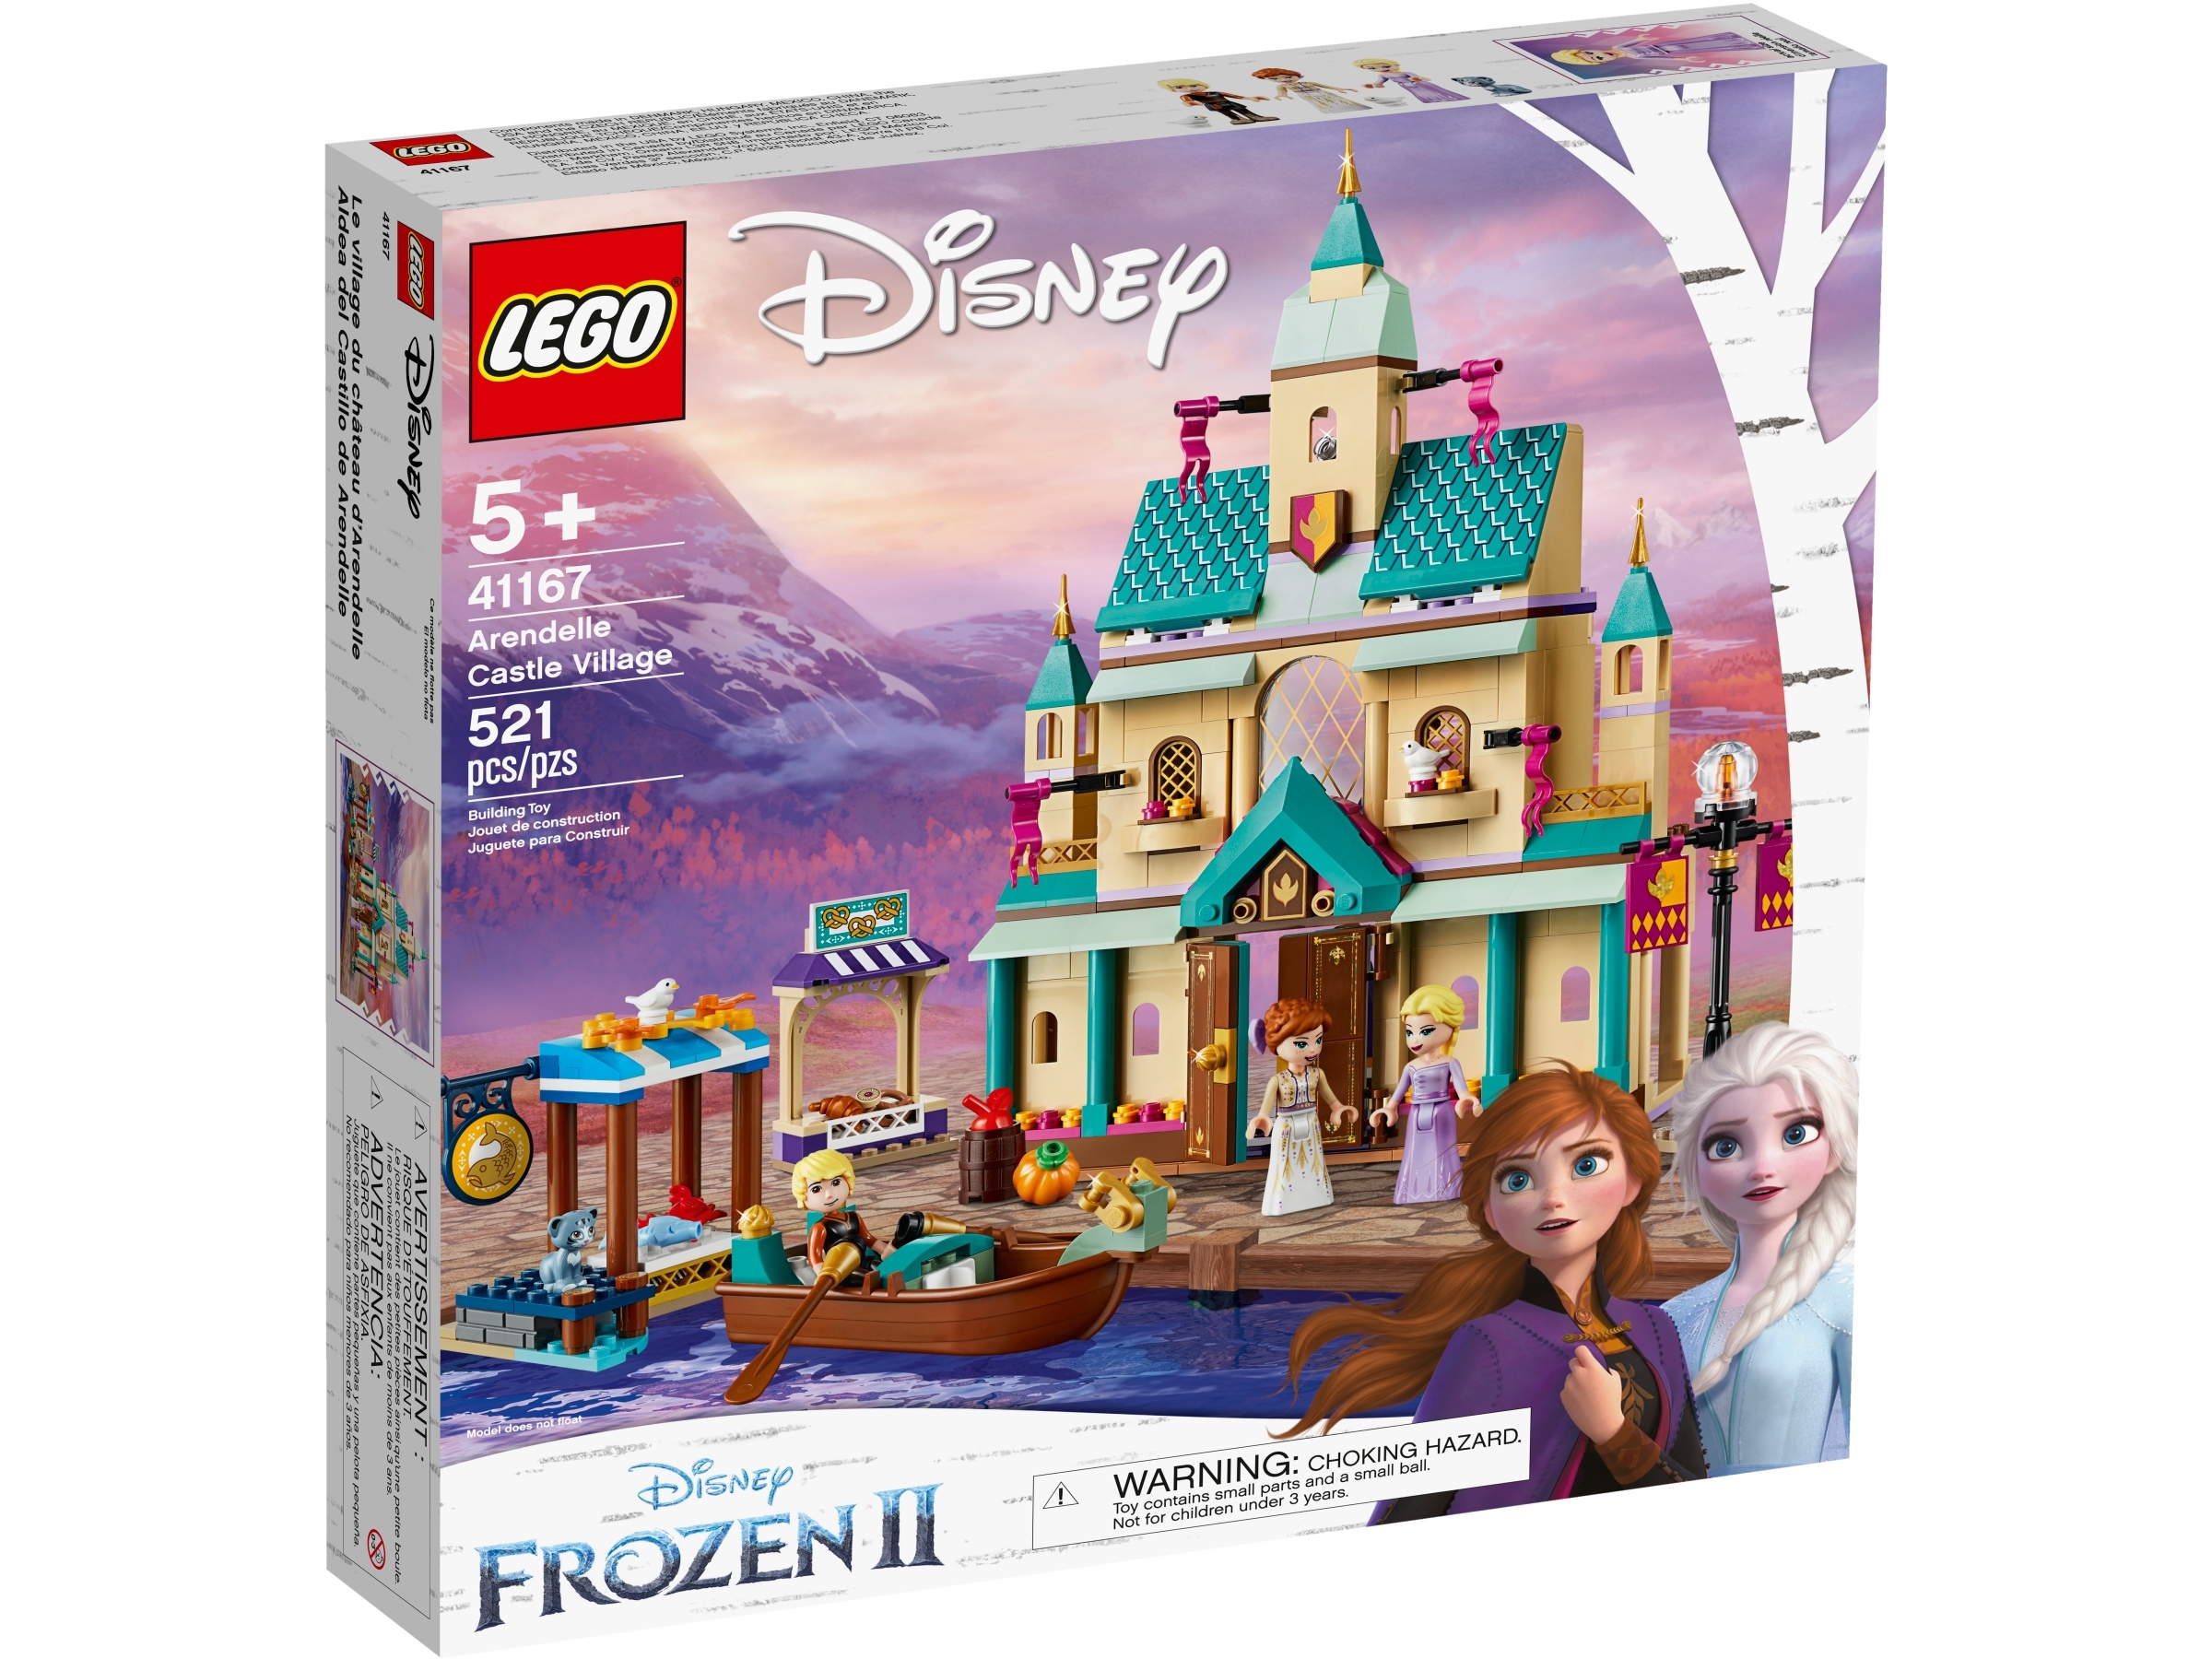 Arendelle Castle Village Lego Frozen 2 Buy Online At The Official Lego Shop Us